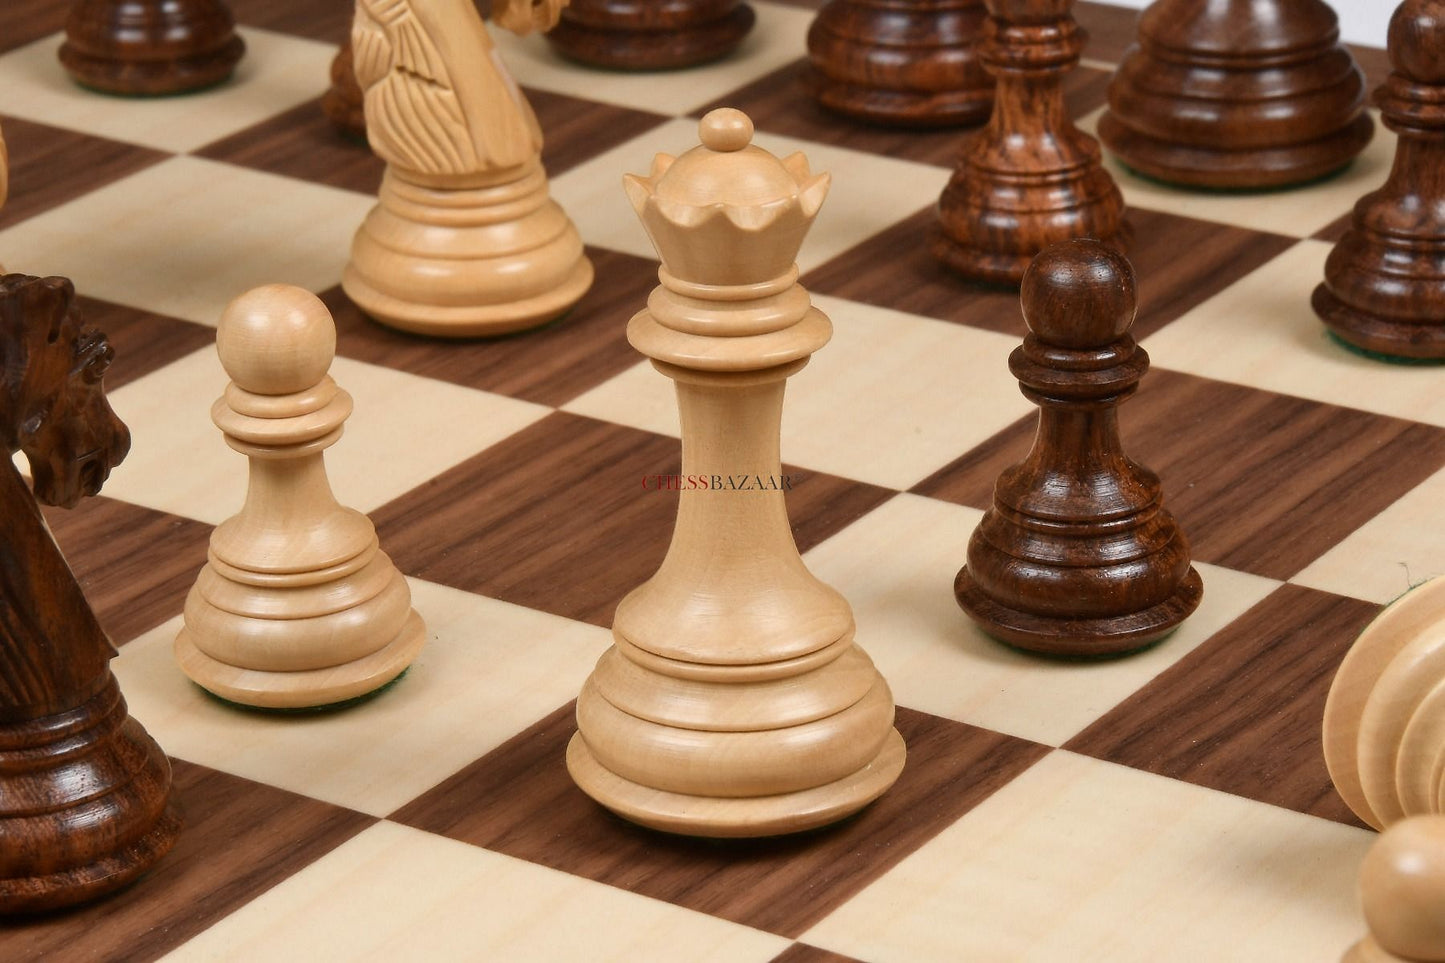 The New Columbian Staunton Series Chess Pieces in Sheesham & Box wood - 3.8" King